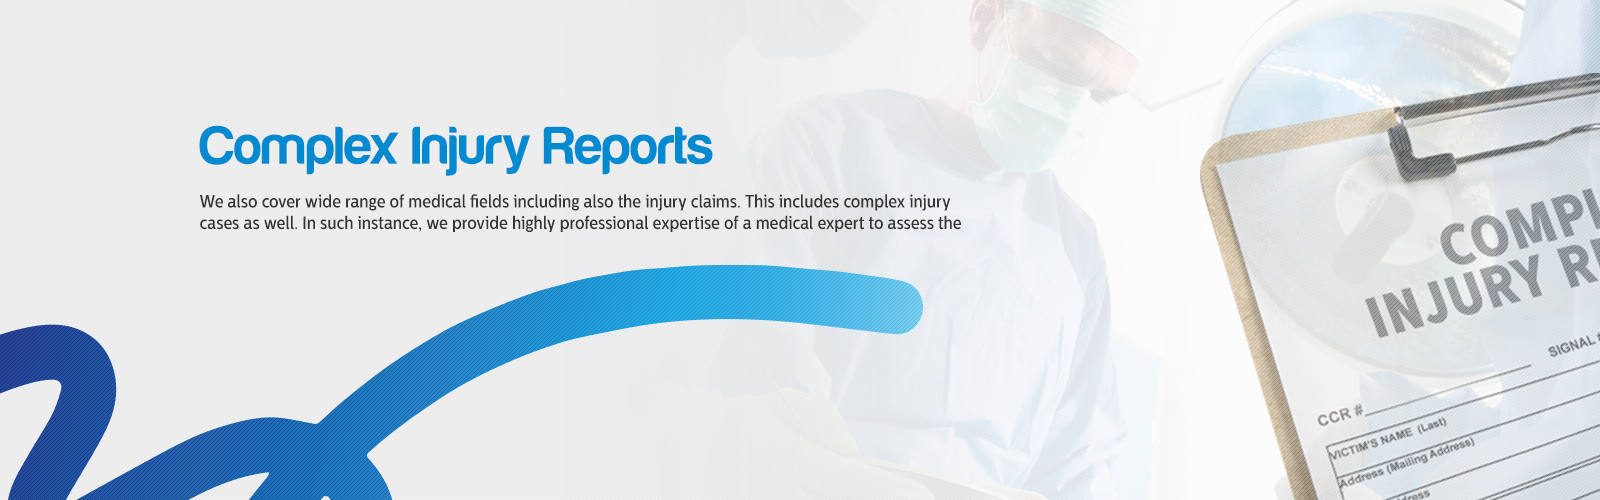 NRI_Complex injury reports_banner